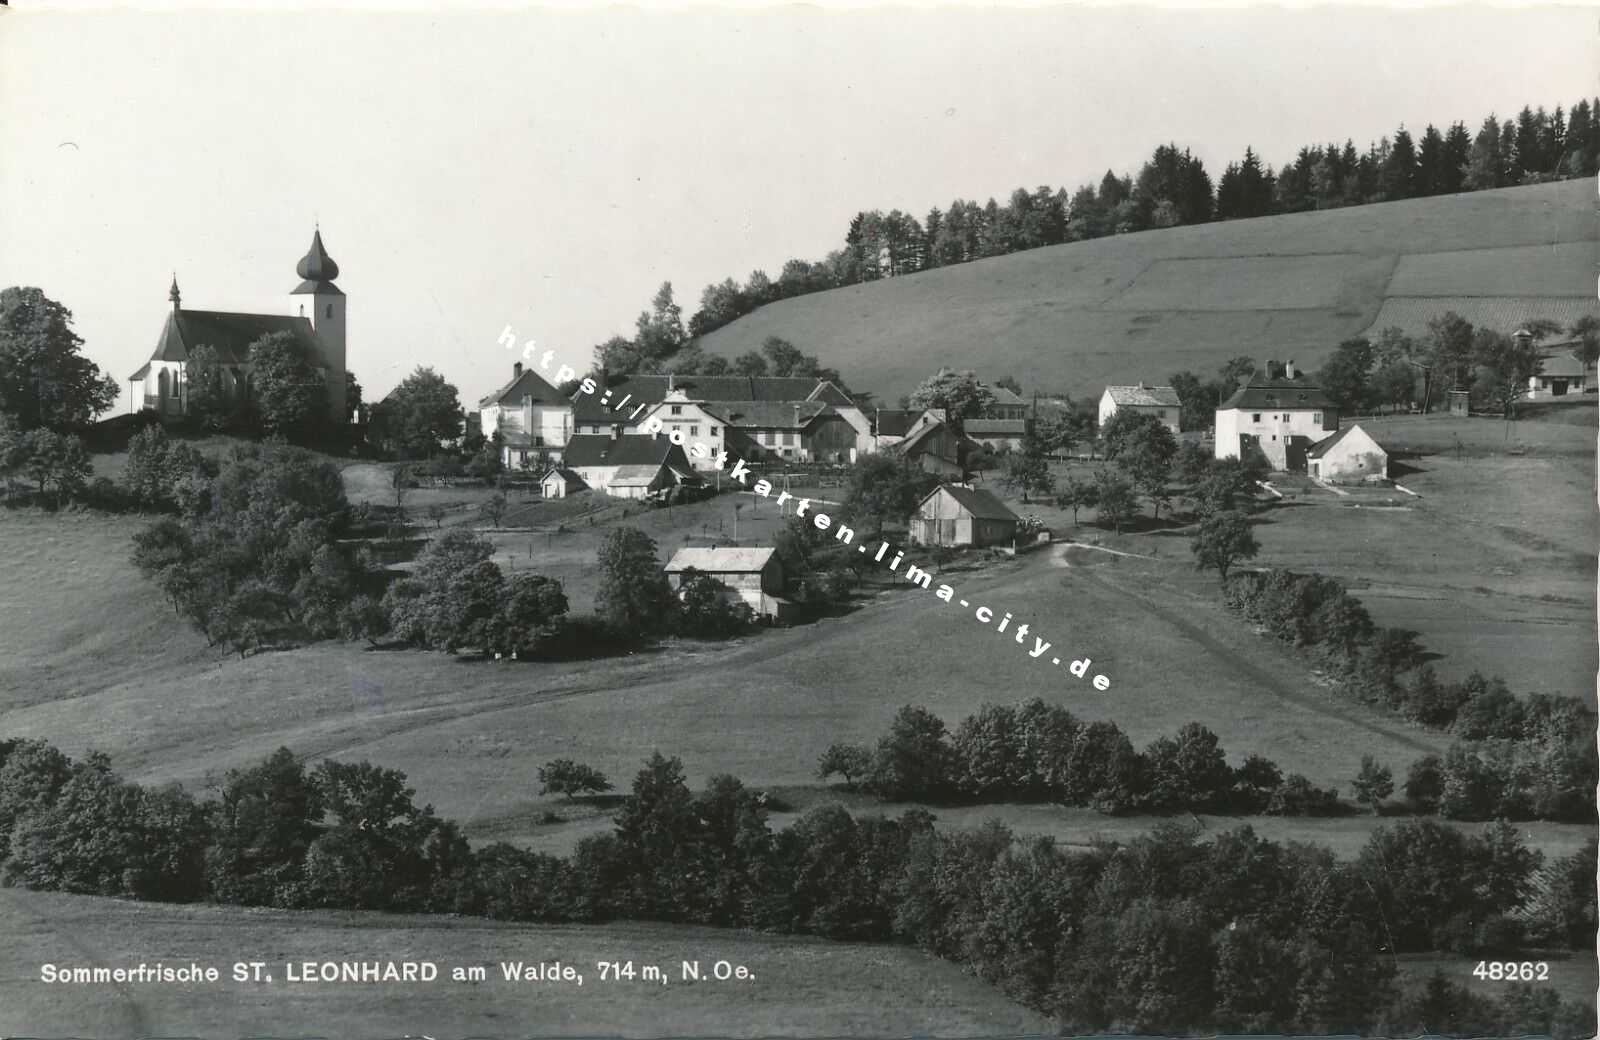 St. Leonhard am Walde 1965